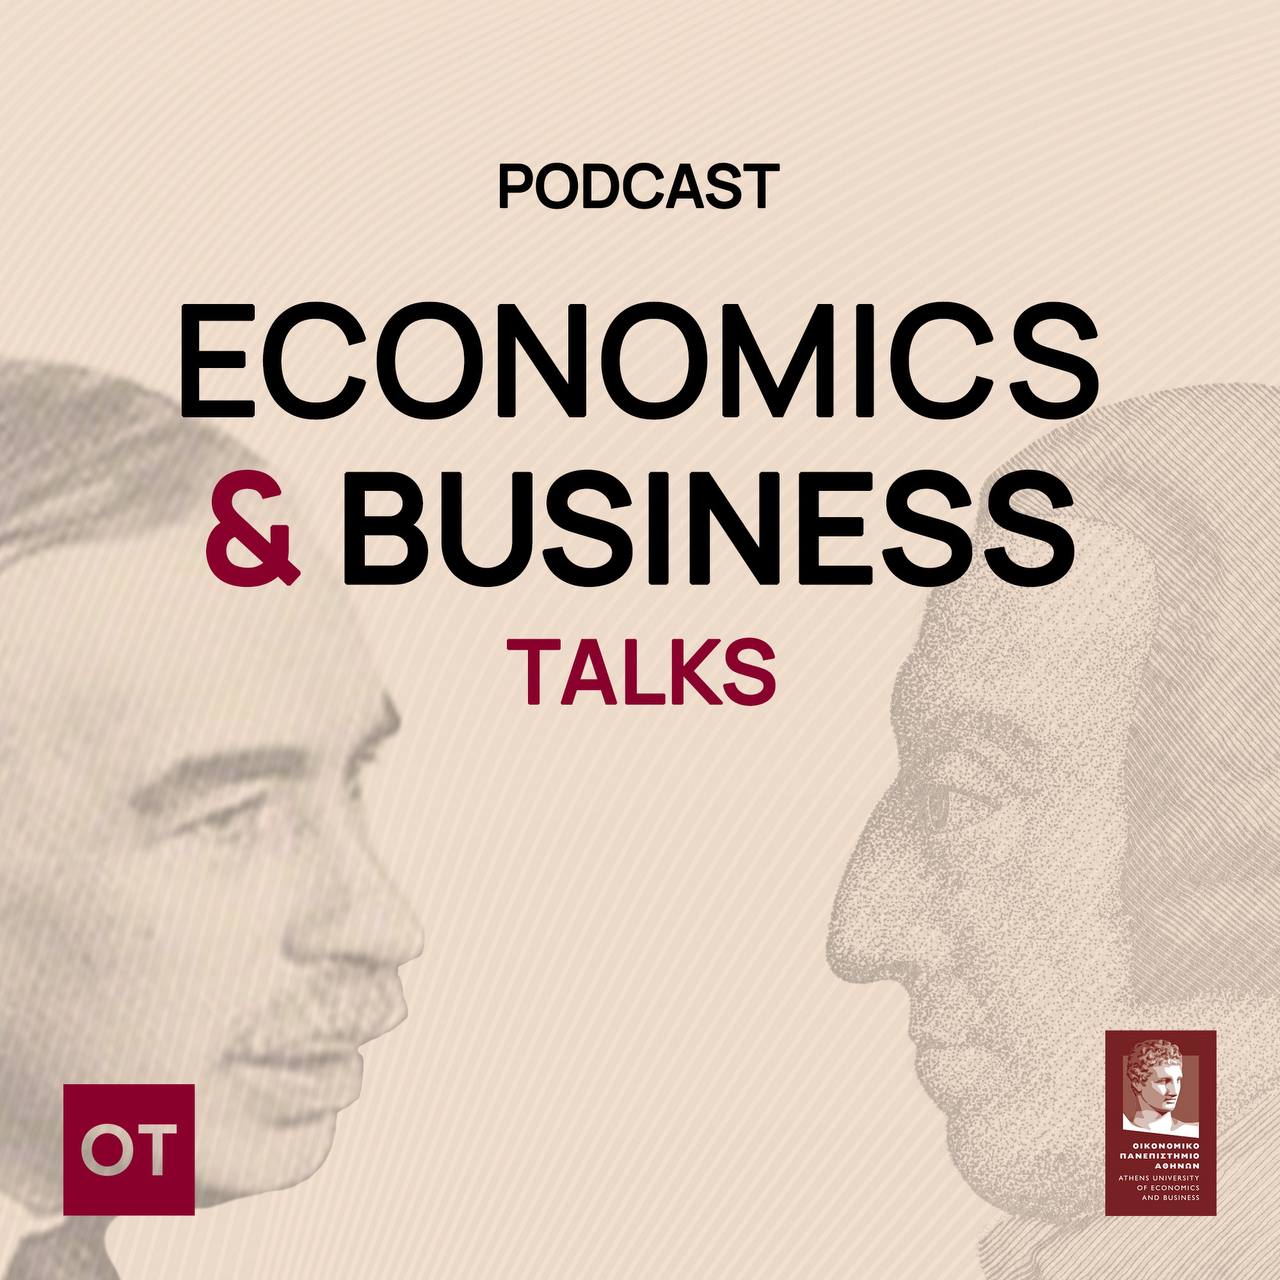 PODCAST Economics & Business TALKS – Φοίβη Κουντούρη: Οι κατηγορίες επενδύσεων που λέγονται βιώσιμες